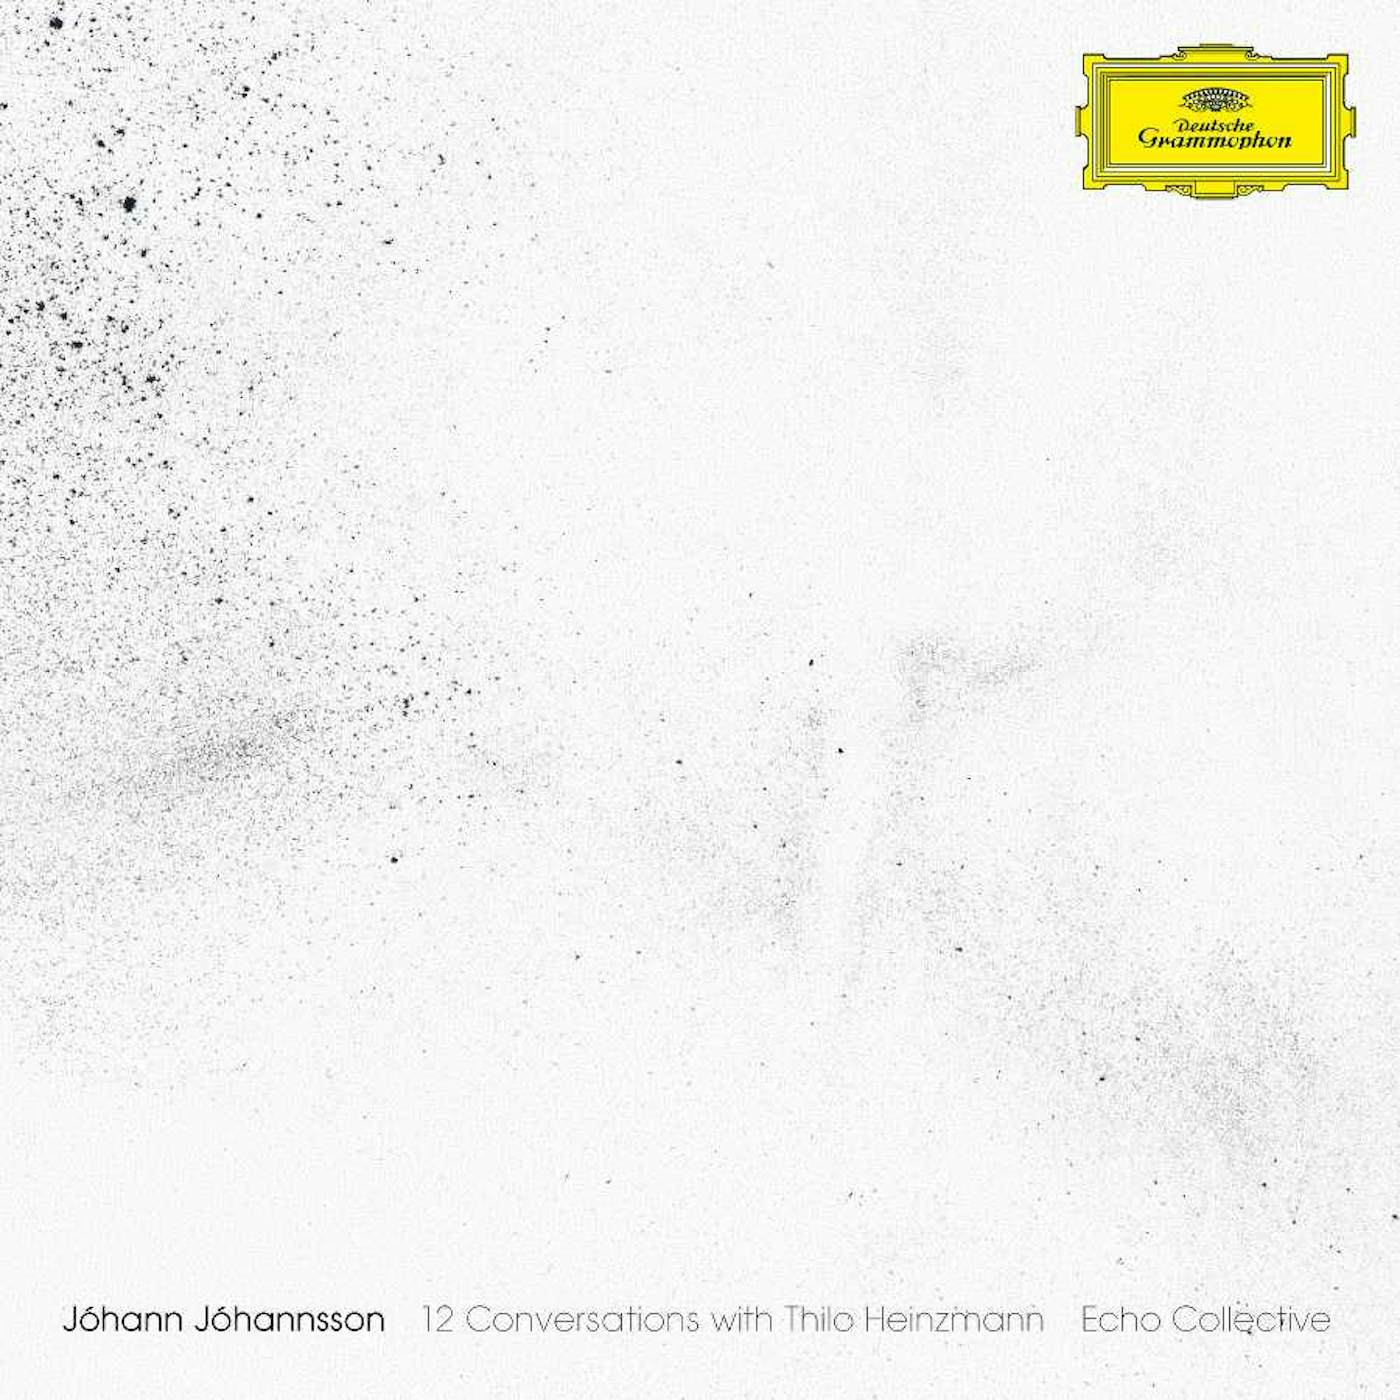 Echo Collective JOHANN JOHANNSSOM: 12 CONVERSATIONS WITH THILO HEI Vinyl Record